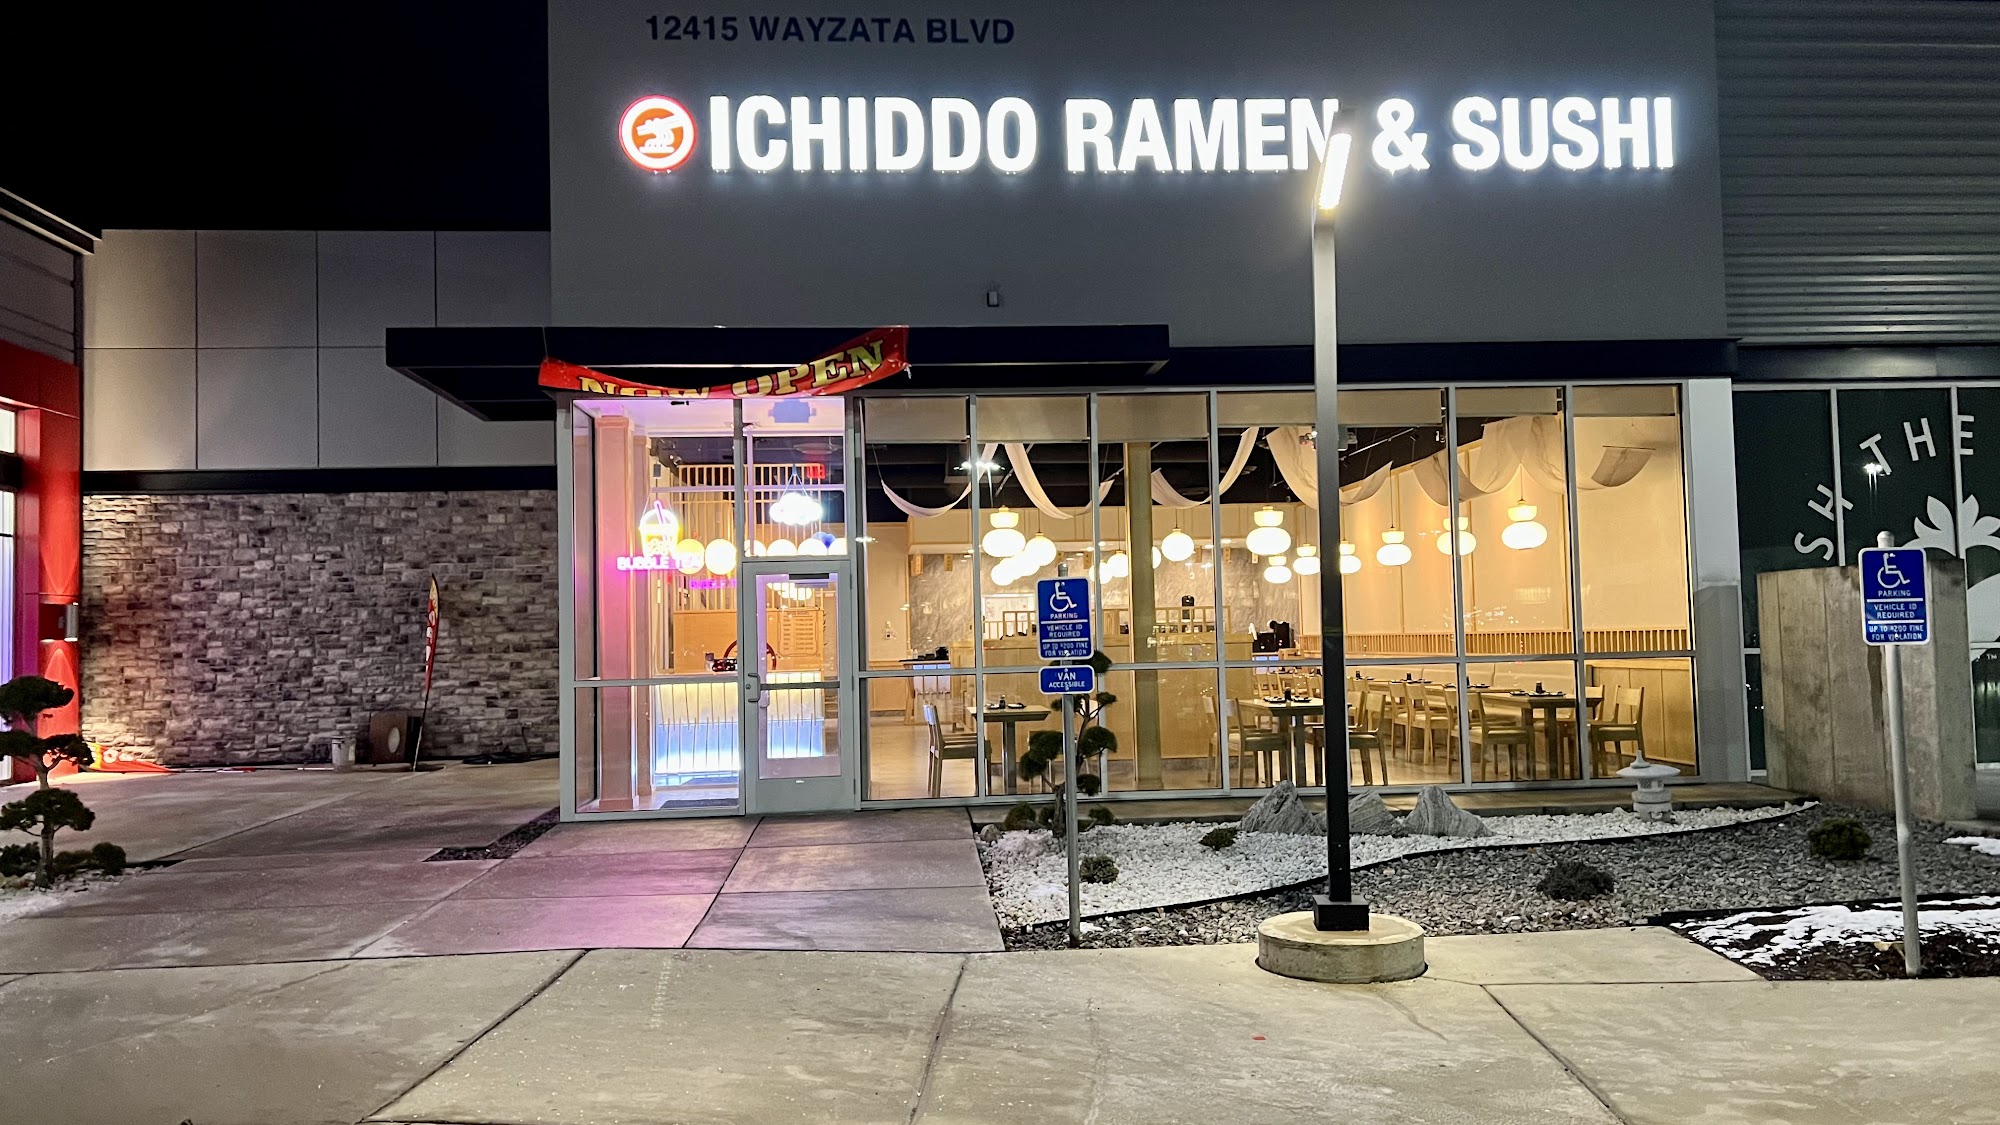 Ichiddo Ramen & Sushi